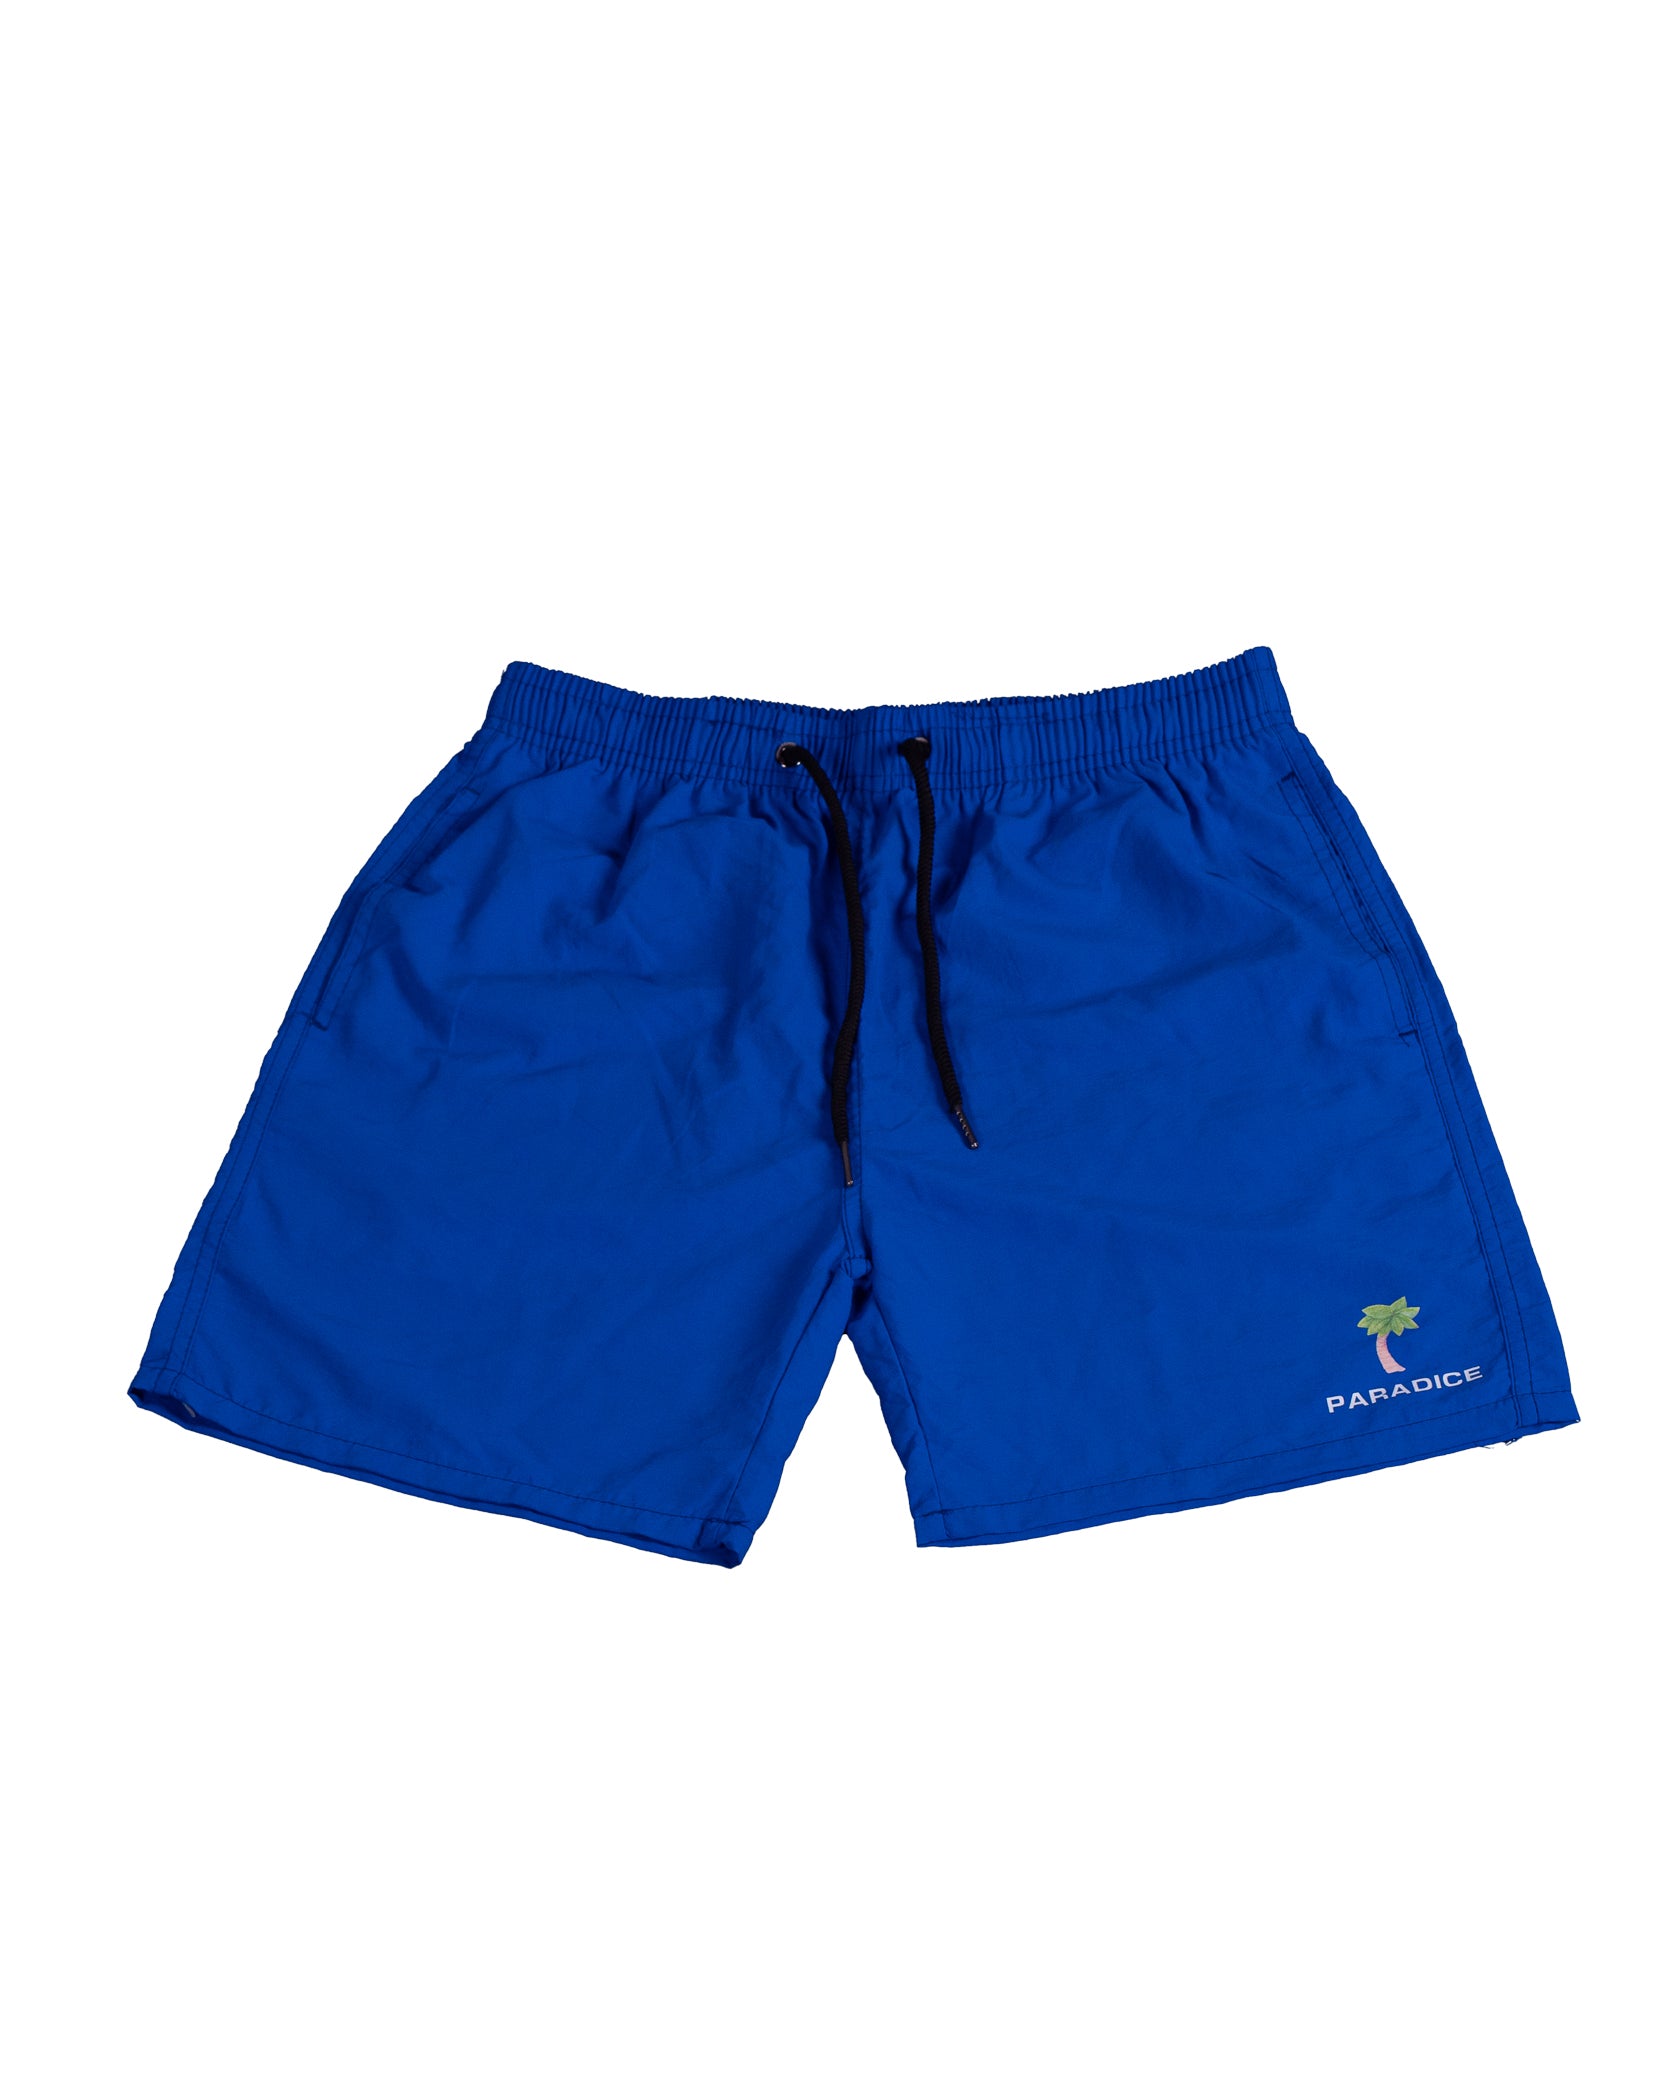 Unisex board shorts